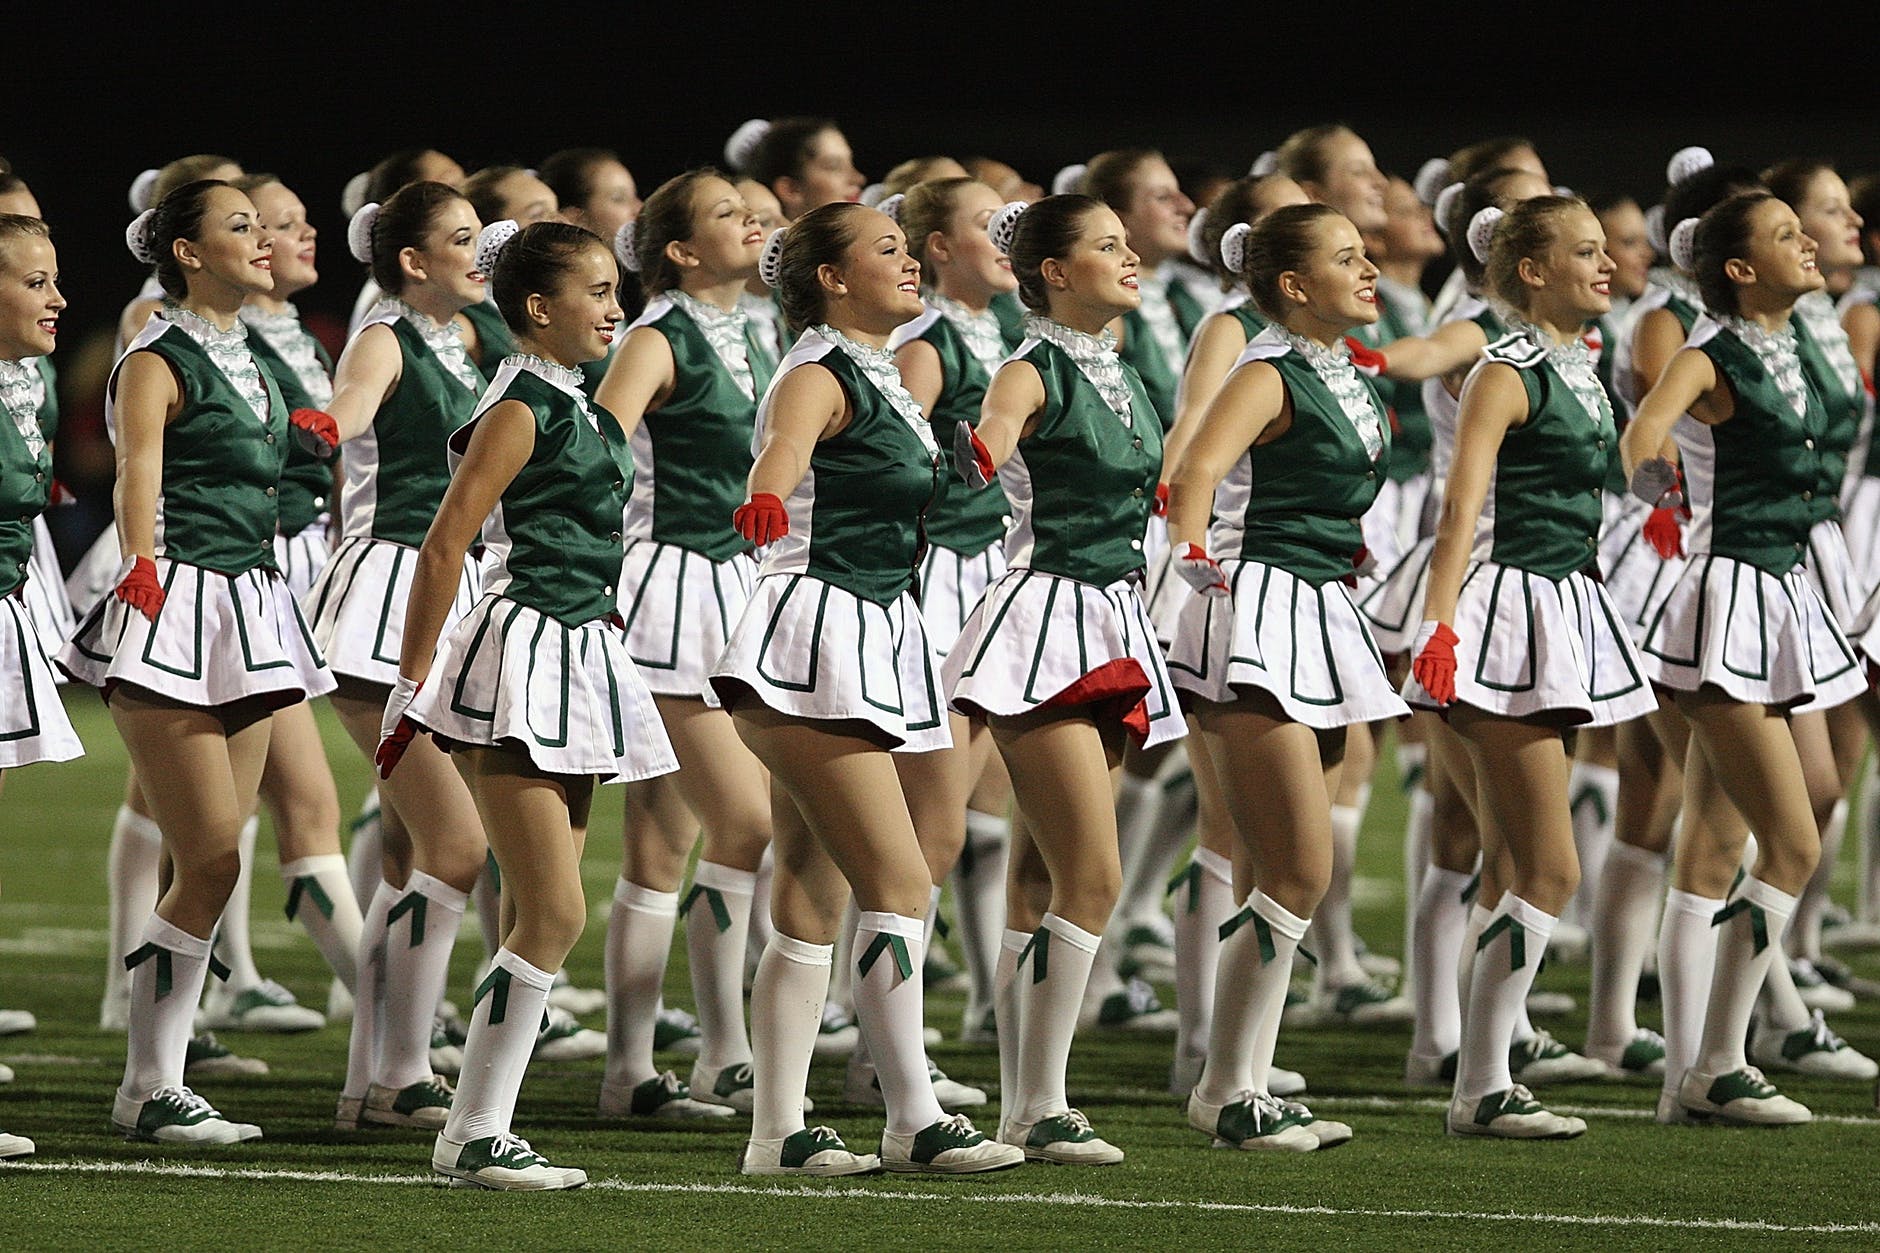 group of cheerleader on green field